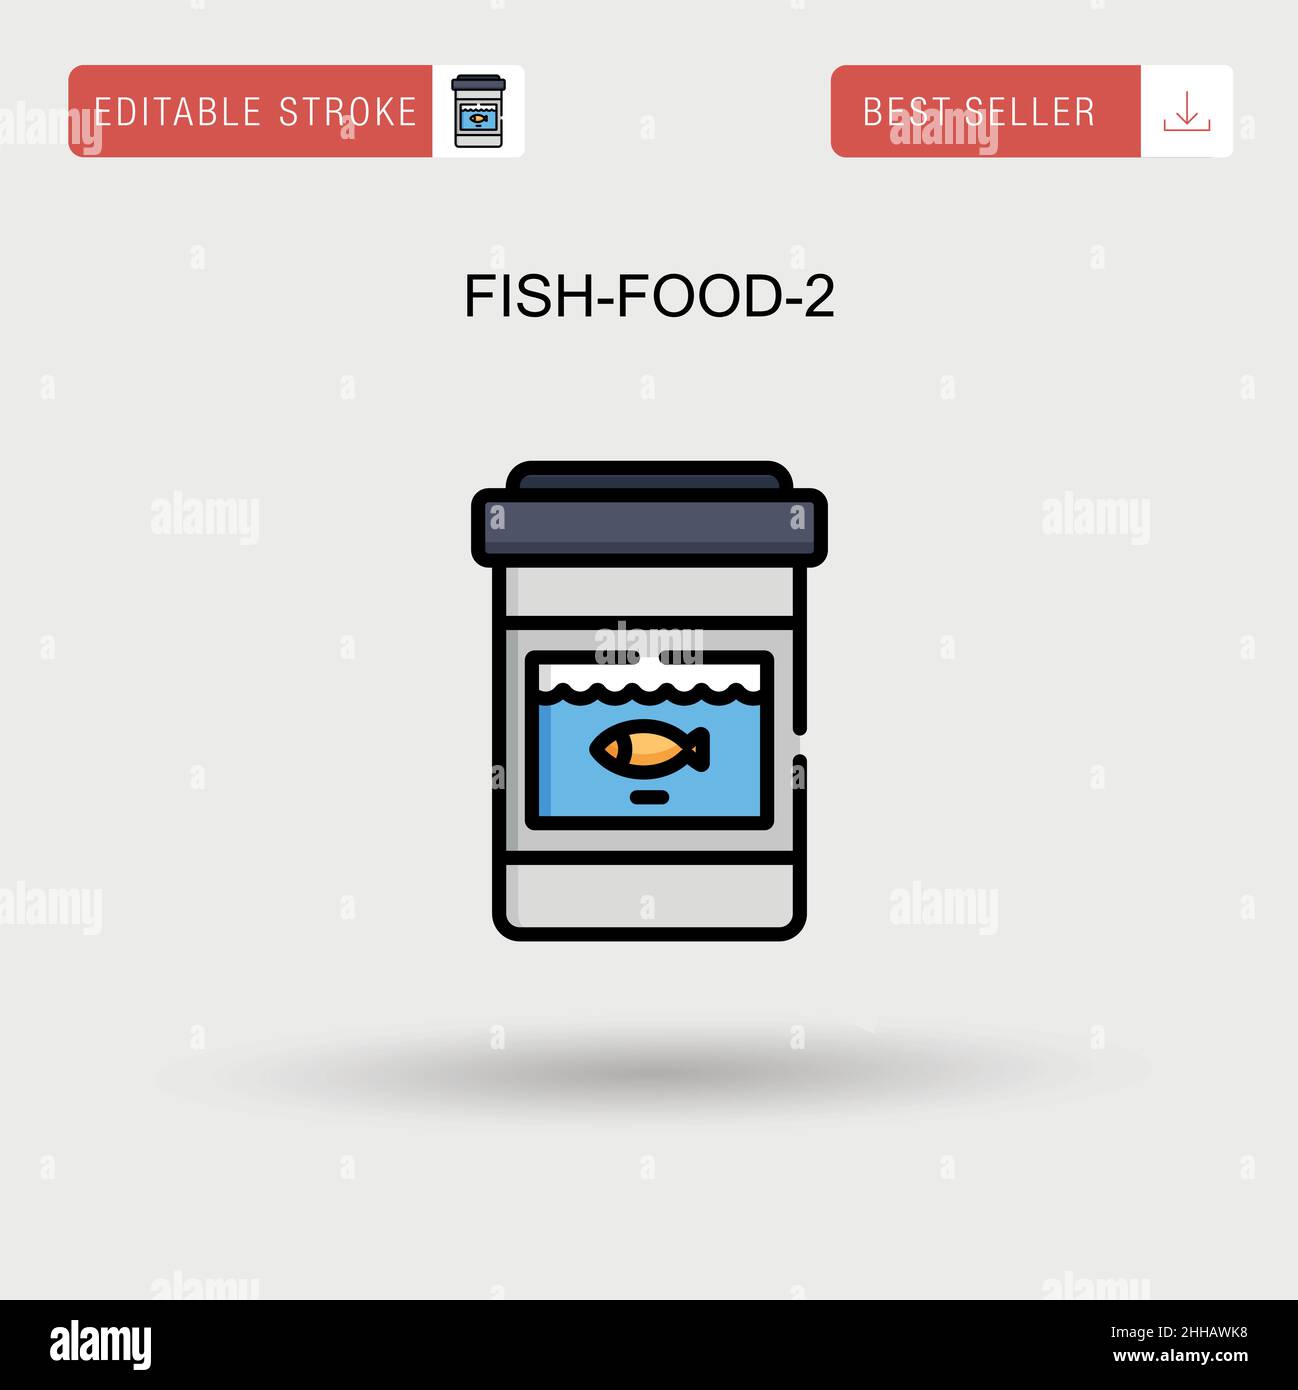 Fish-Food-2 einfaches Vektorsymbol. Stock Vektor